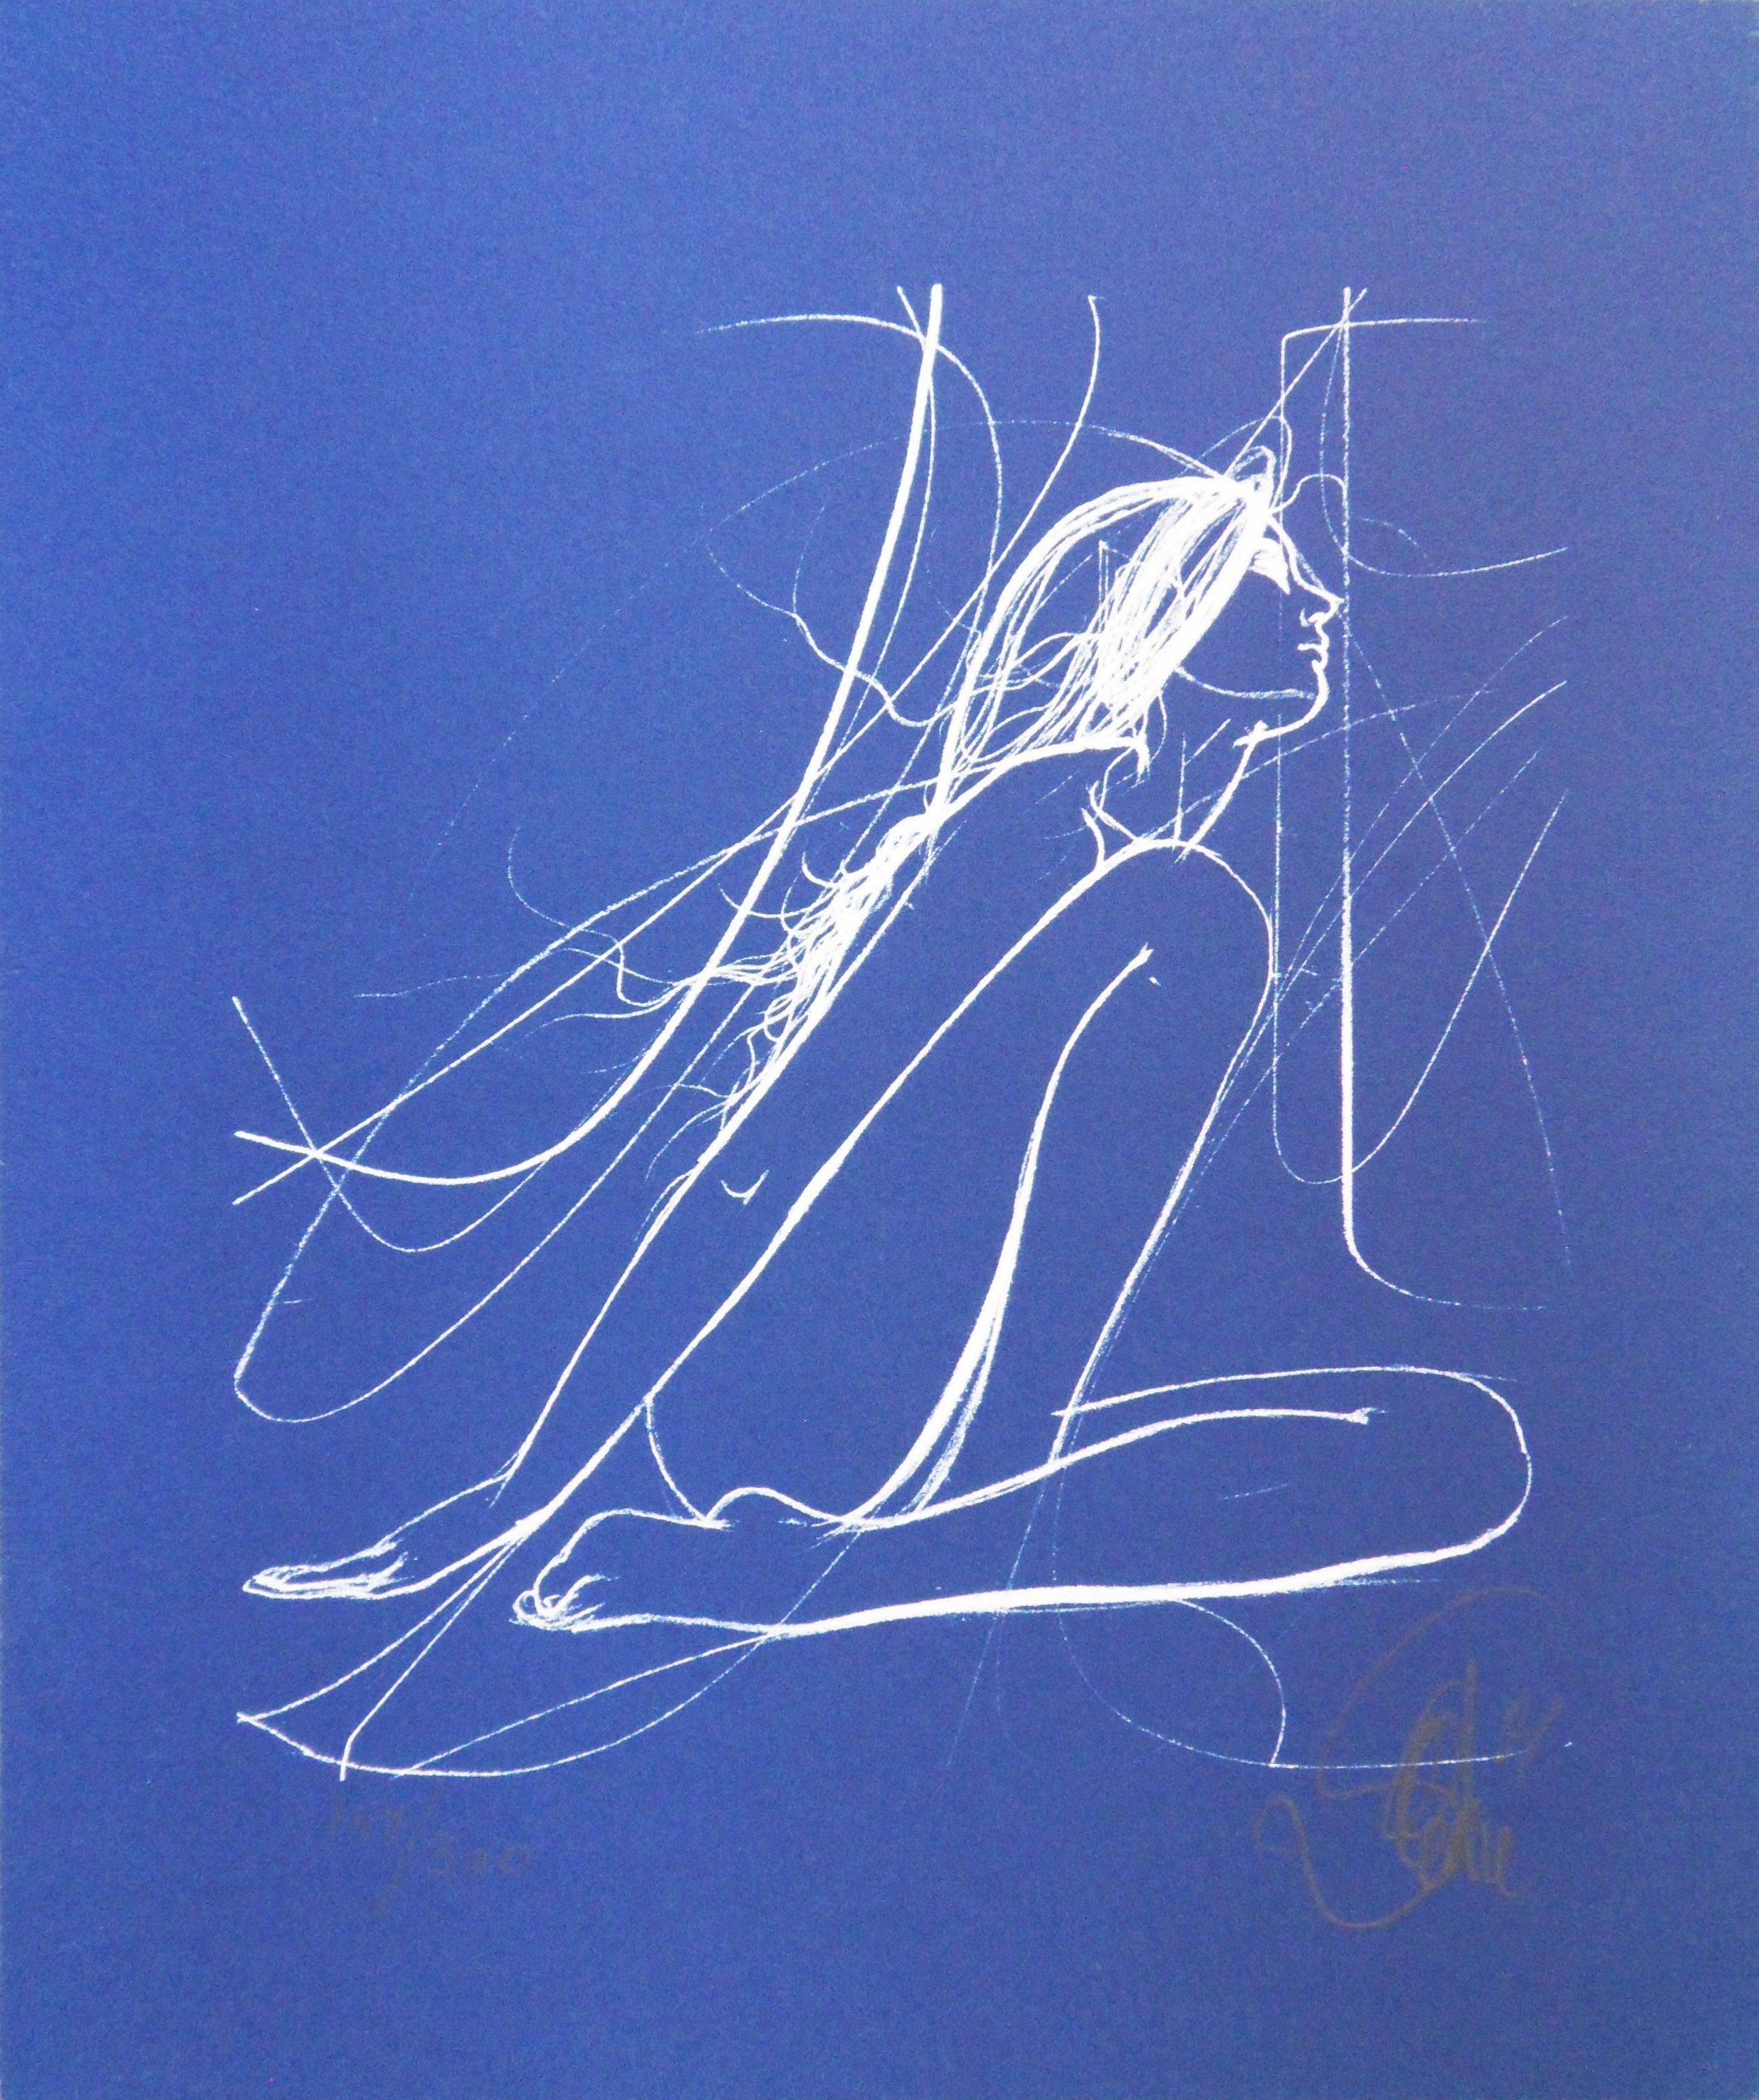 The Dancer - Original handsigned lithograph - Ltd 300